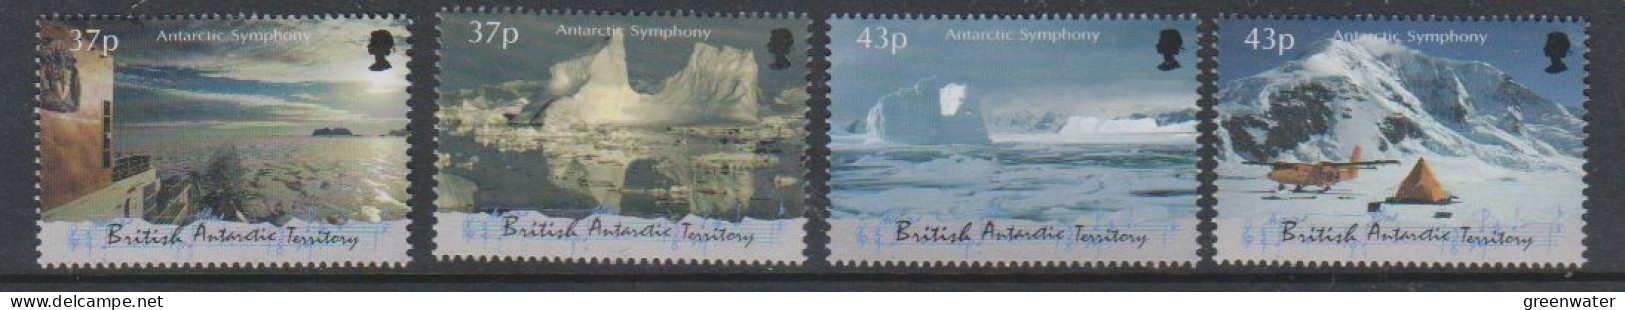 British Antarctic Territory (BAT) 2000 Antarctic Symphony 4v** Mnh (59512A) - Unused Stamps